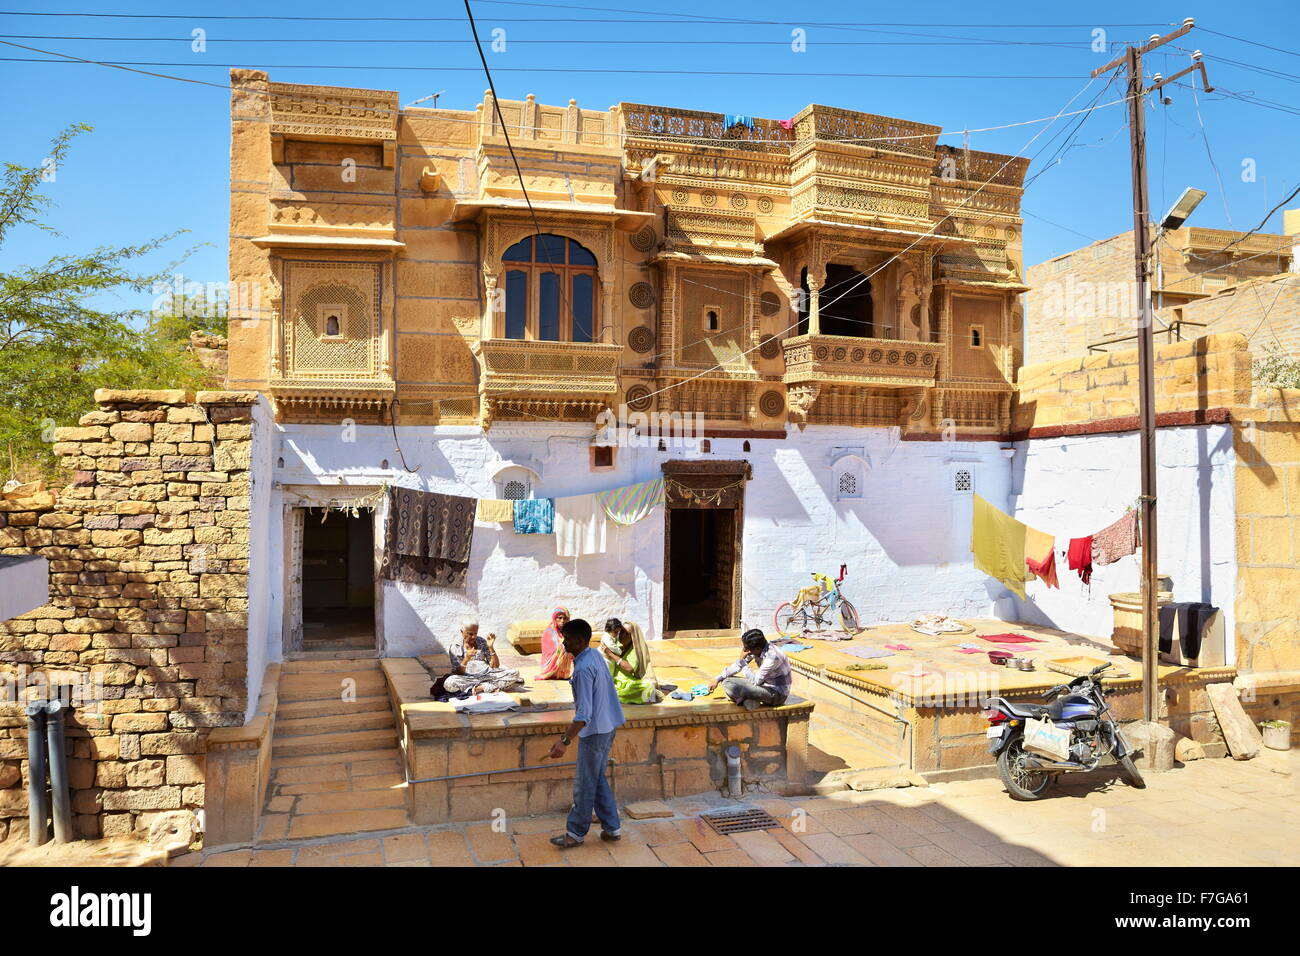 Jaisalmer haveli - tradizionale indiano haveli vecchio (palazzo), Jaisalmer, Rajasthan, India Foto Stock